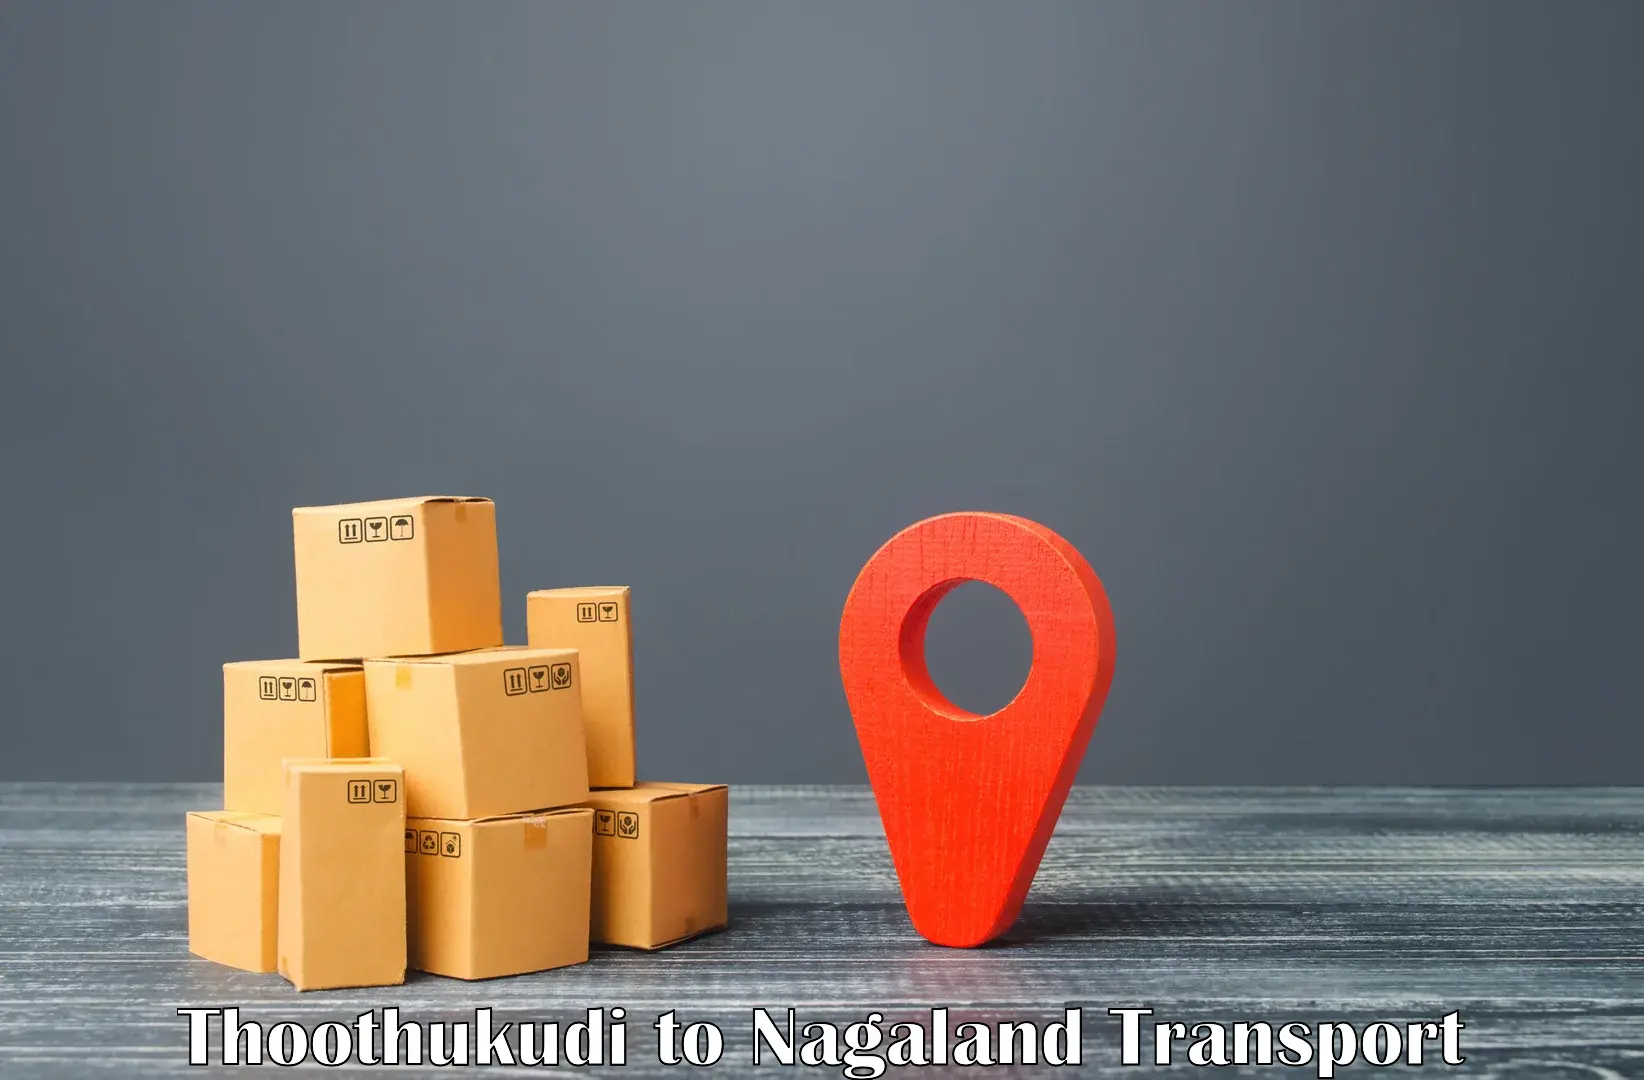 Transport shared services Thoothukudi to Nagaland